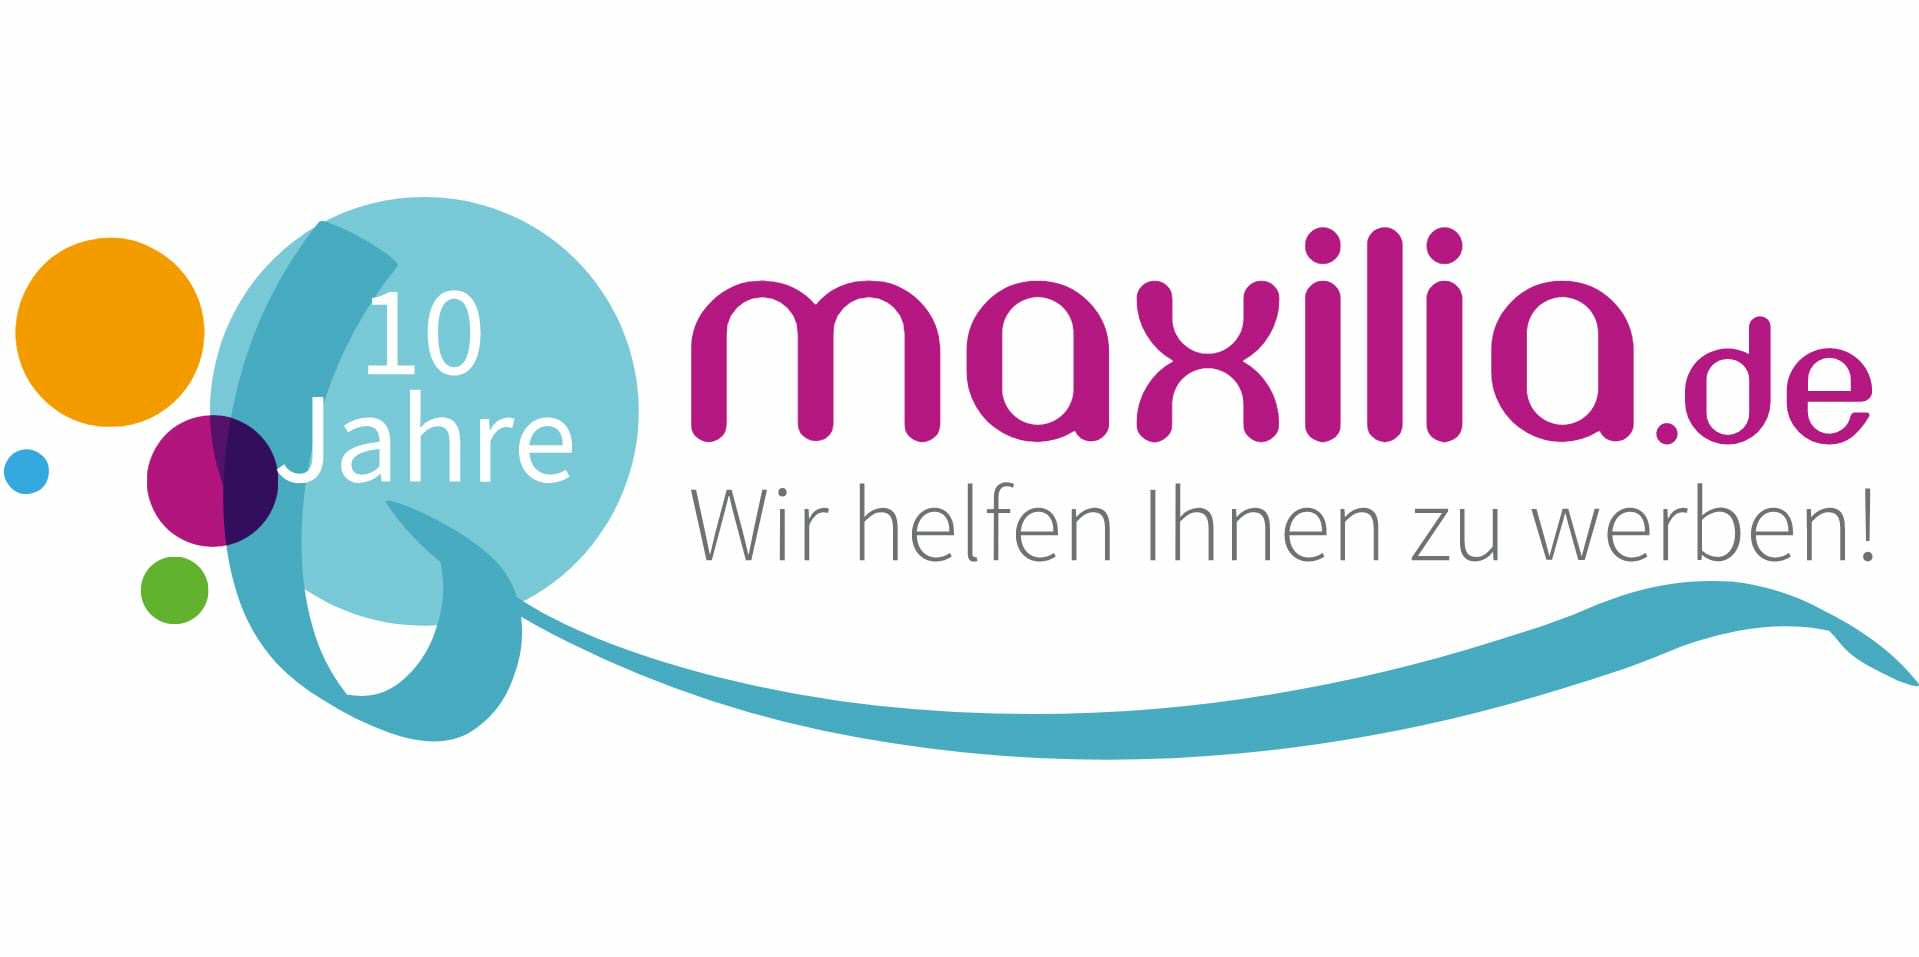 Coole Werbeartikel und Kundengeschenke bei Maxilia.de Dreibeinblog